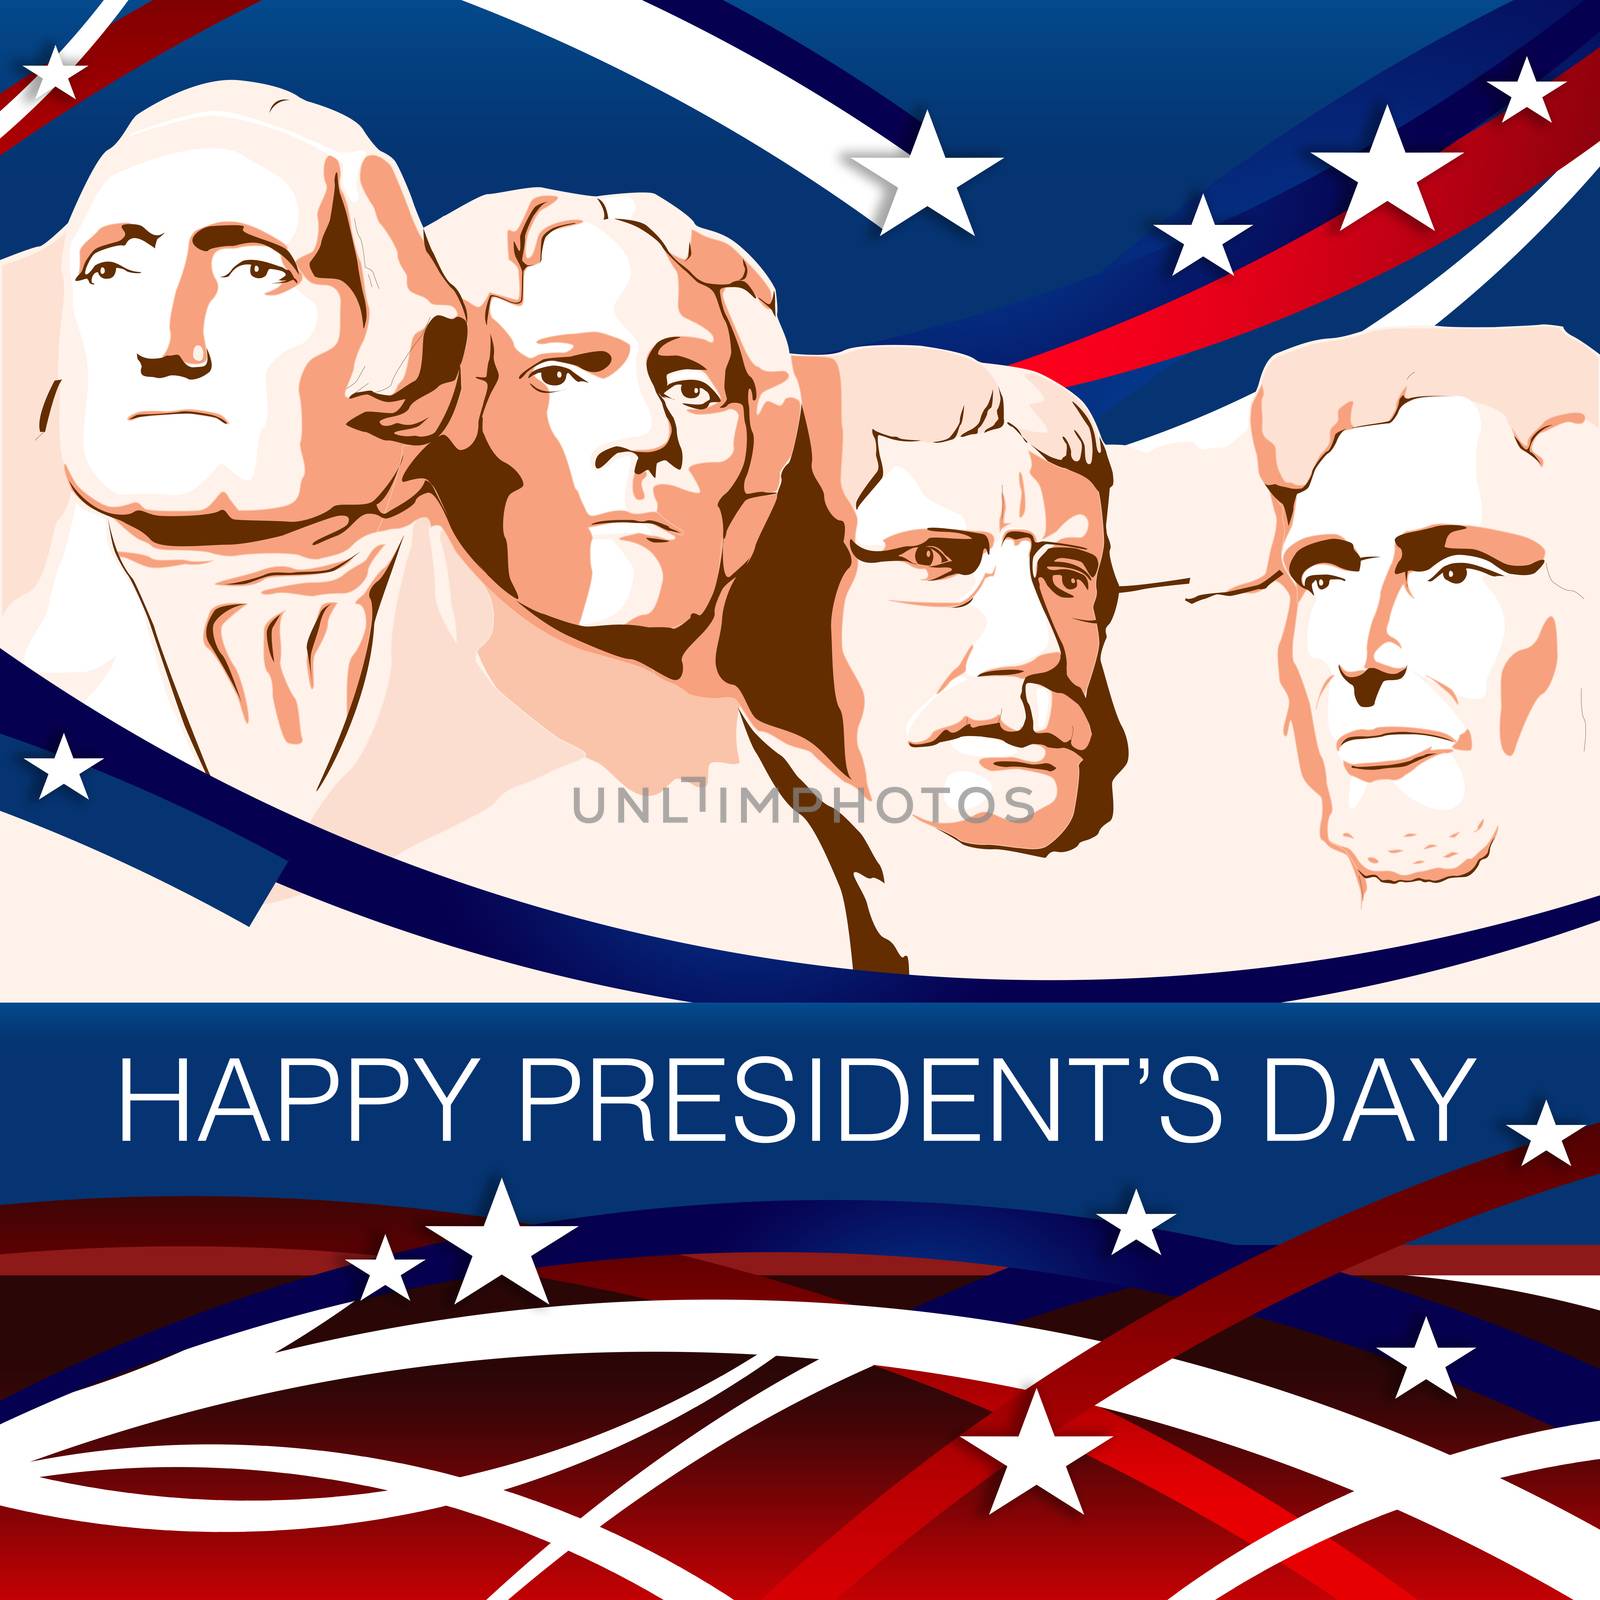 Happy President's Day! by tharun15